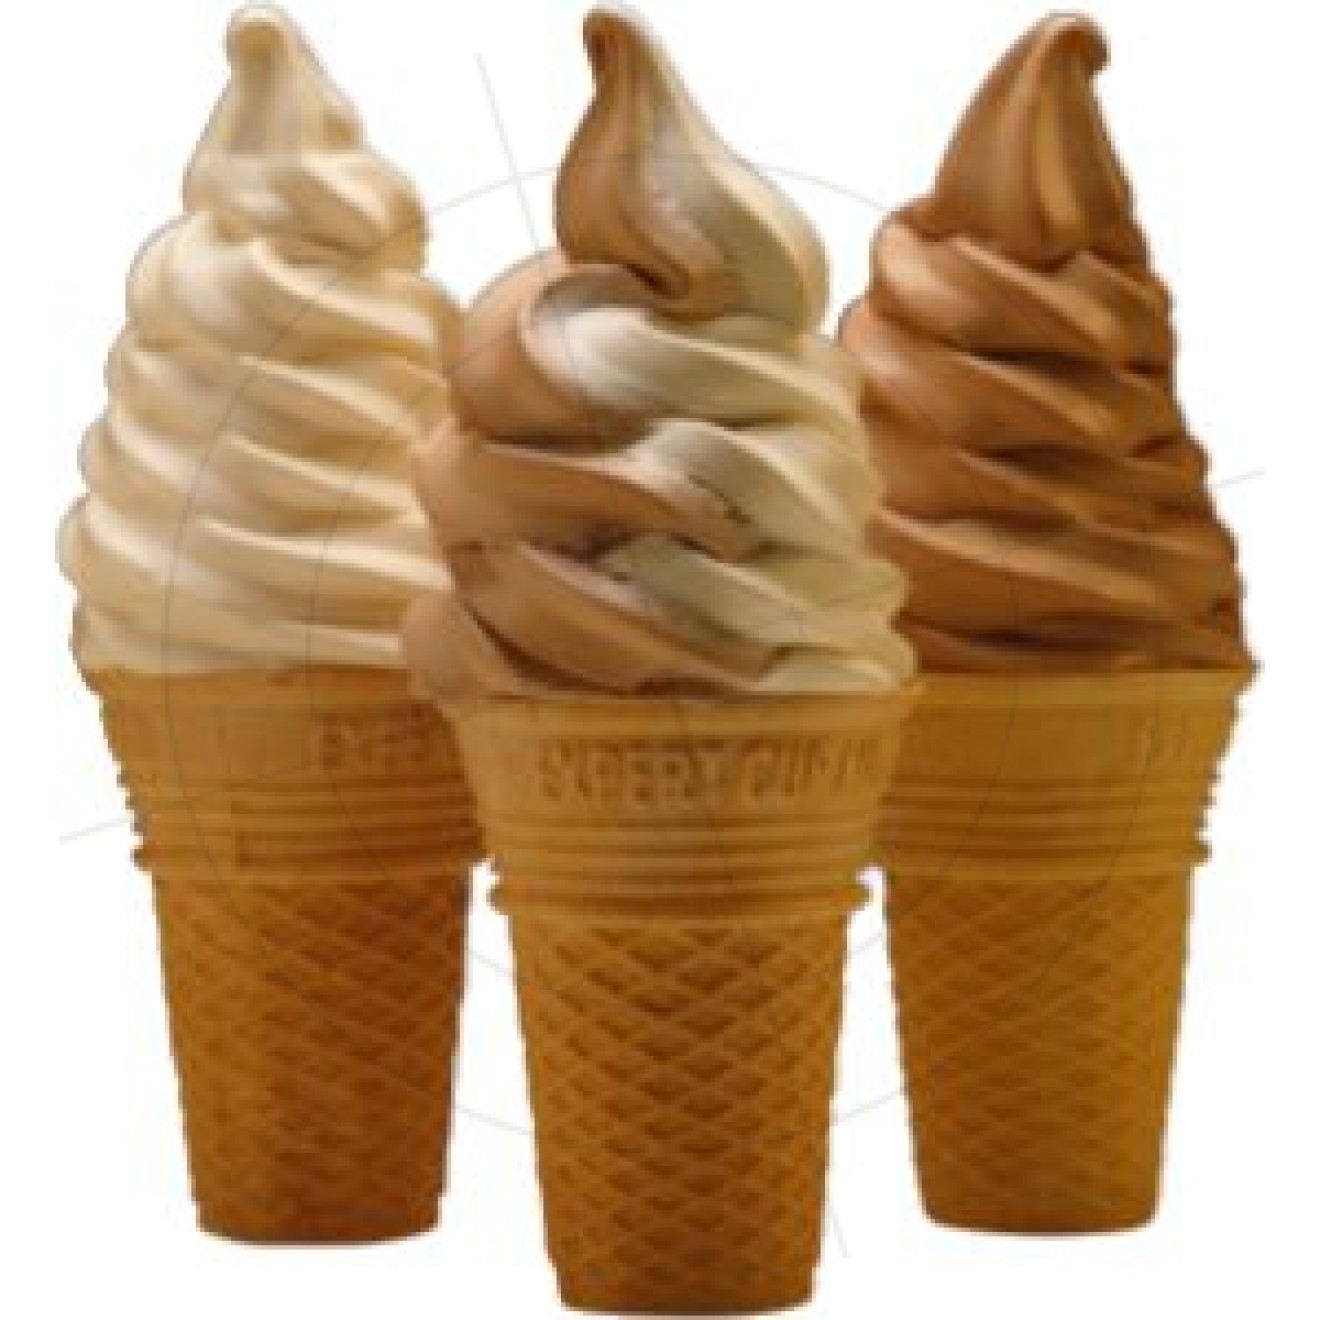 Sticker ice cream cones with chocolate ice cream